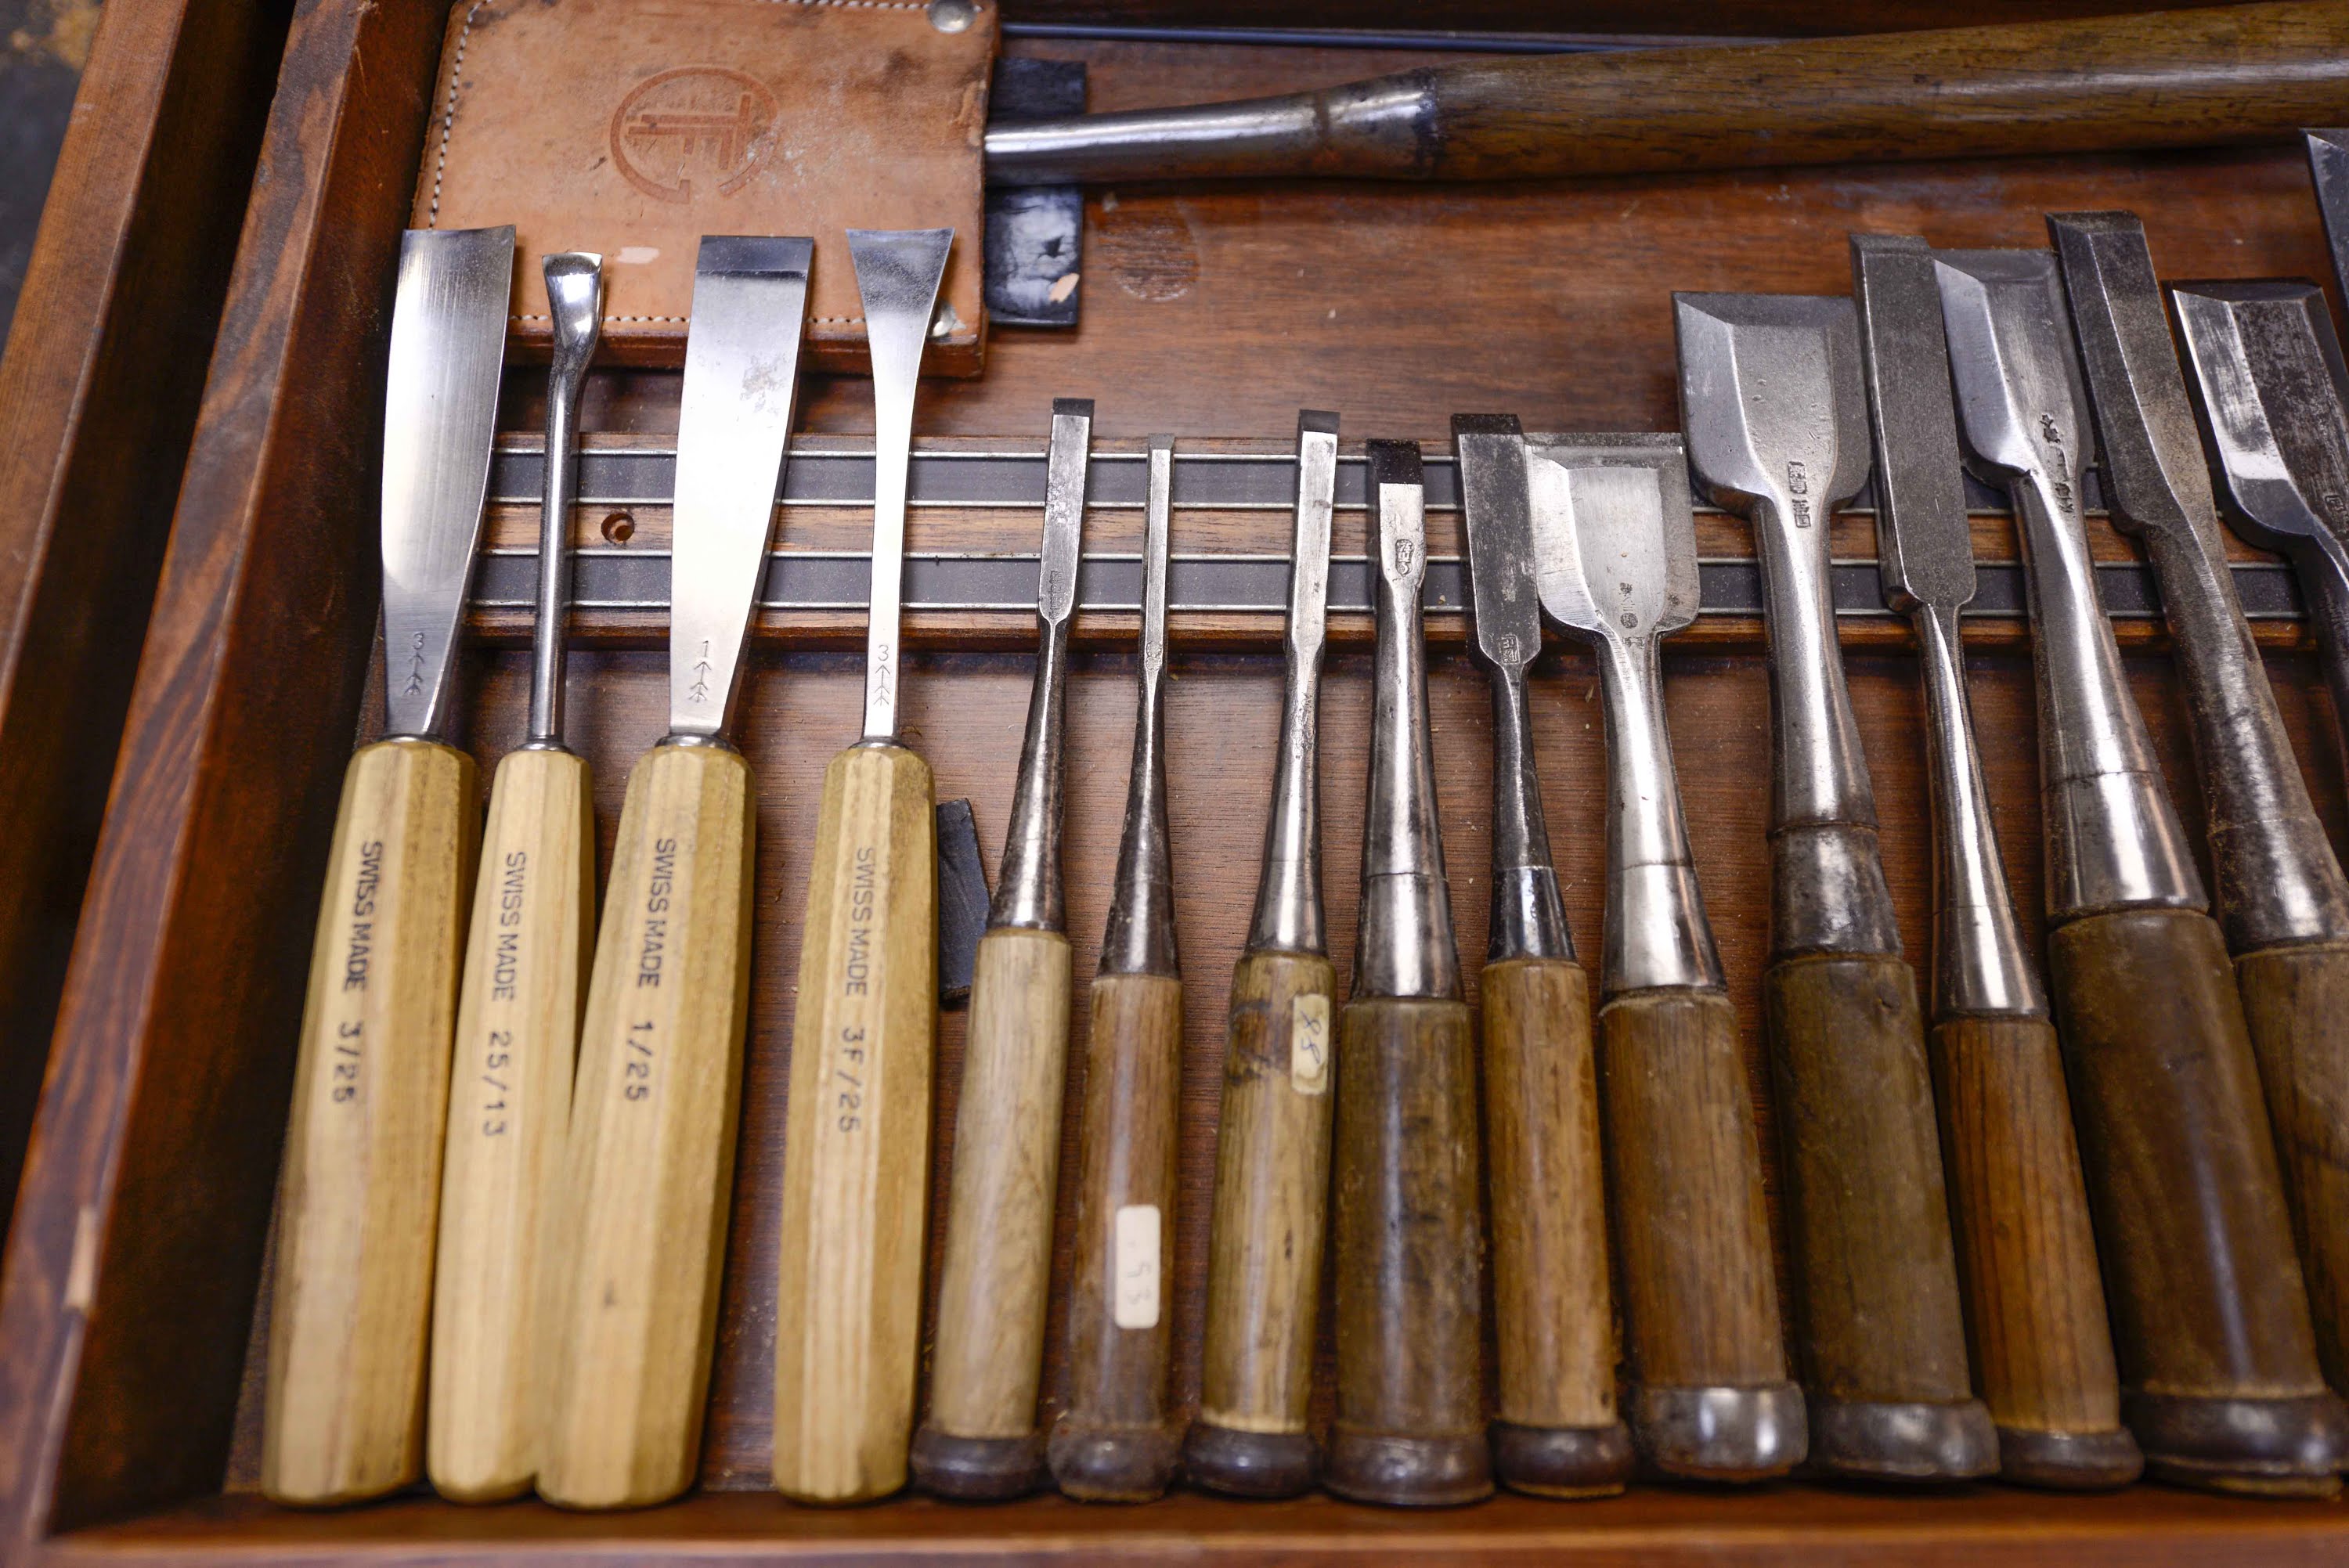 Woodworking, Crazy Sharp Tools! by Hand! - The Samurai Carpenter